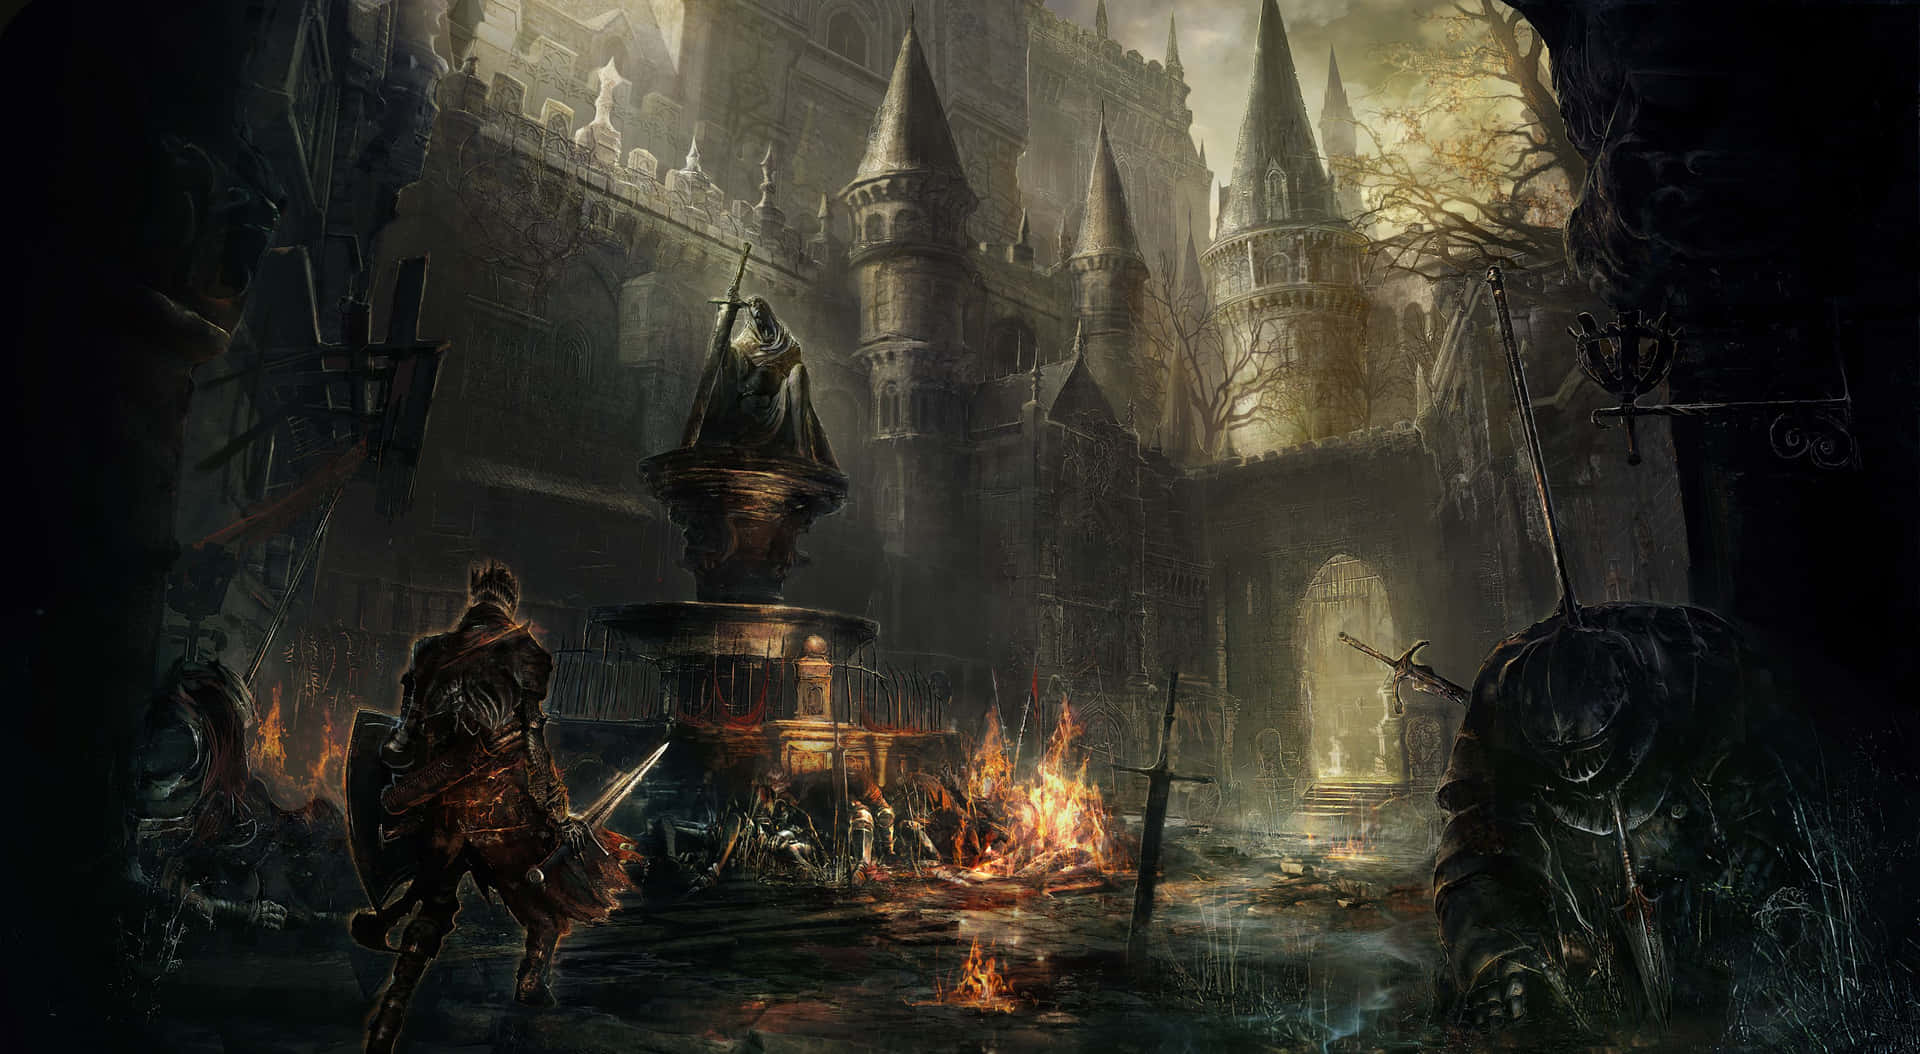 Captivating Fantasy Game Adventure Wallpaper